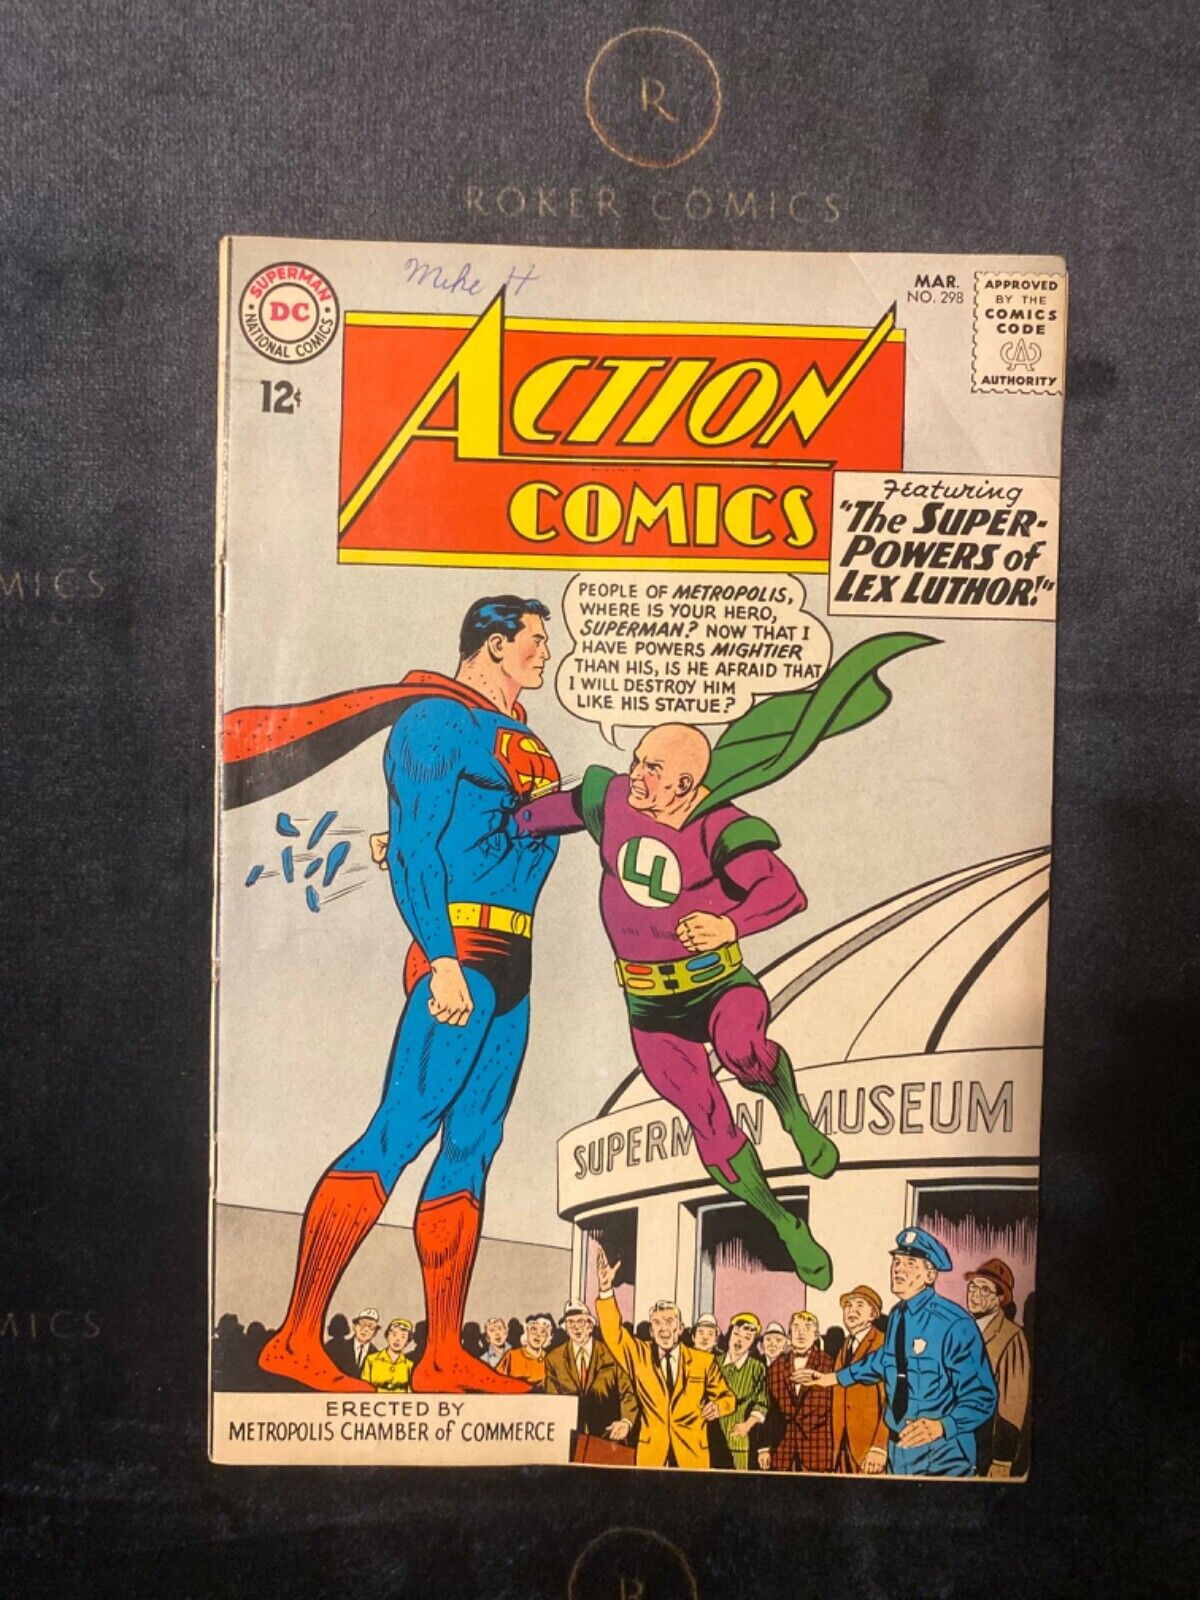 Very Rare 1963 Action Comics #298 (SILVER AGE)